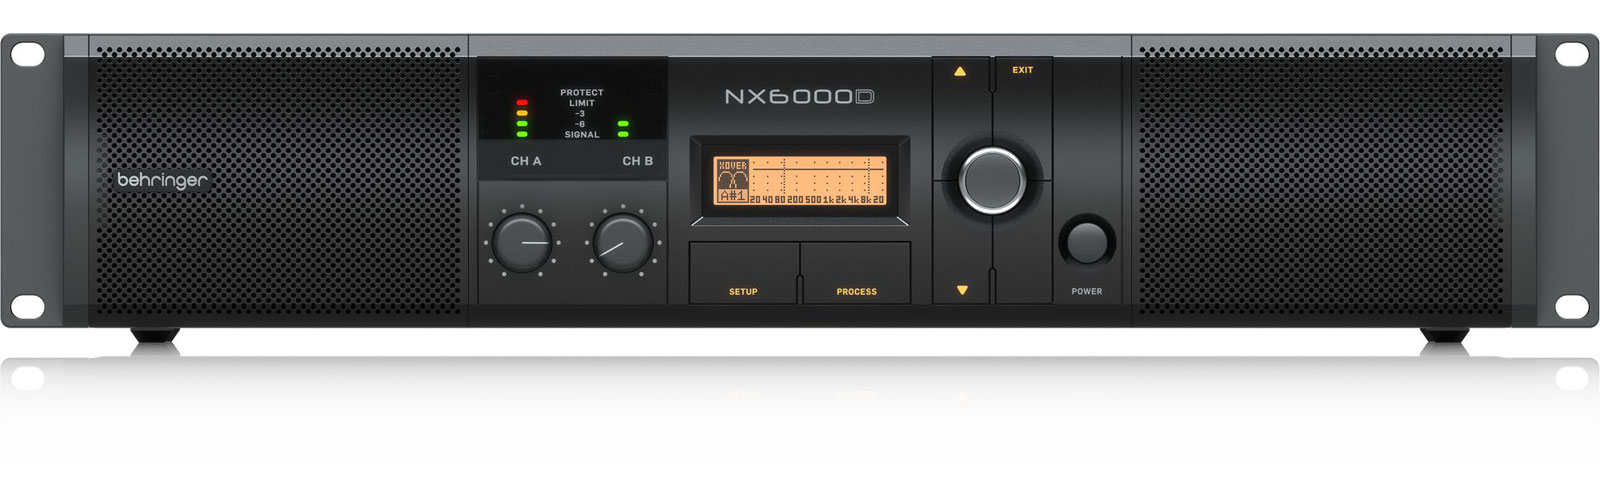 BEHRINGER NX6000D - AMPLI STEREO 3 000 WATTS AVEC DSP